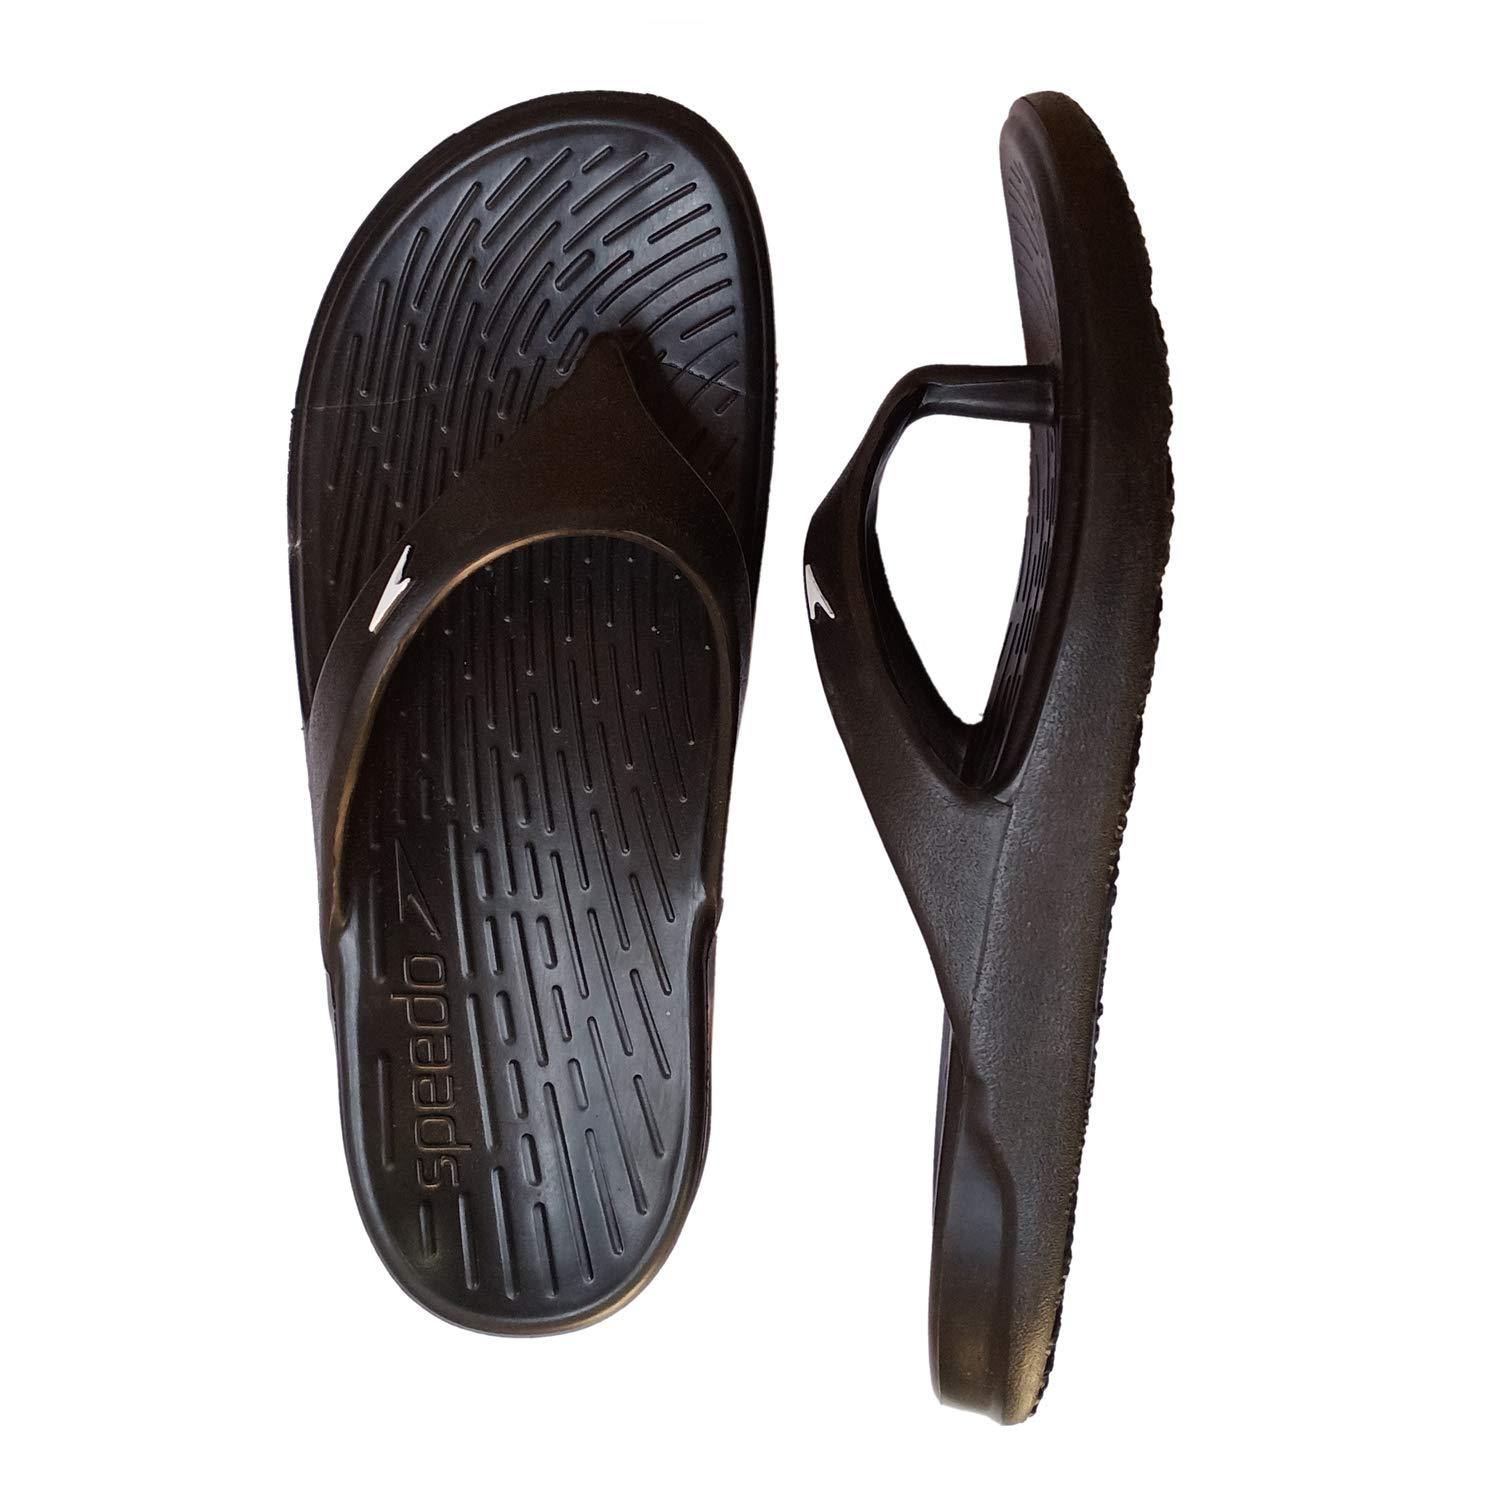 Speedo Extra-Light Water Resistant Swimming Junior Slippers - Unisex - Best Price online Prokicksports.com